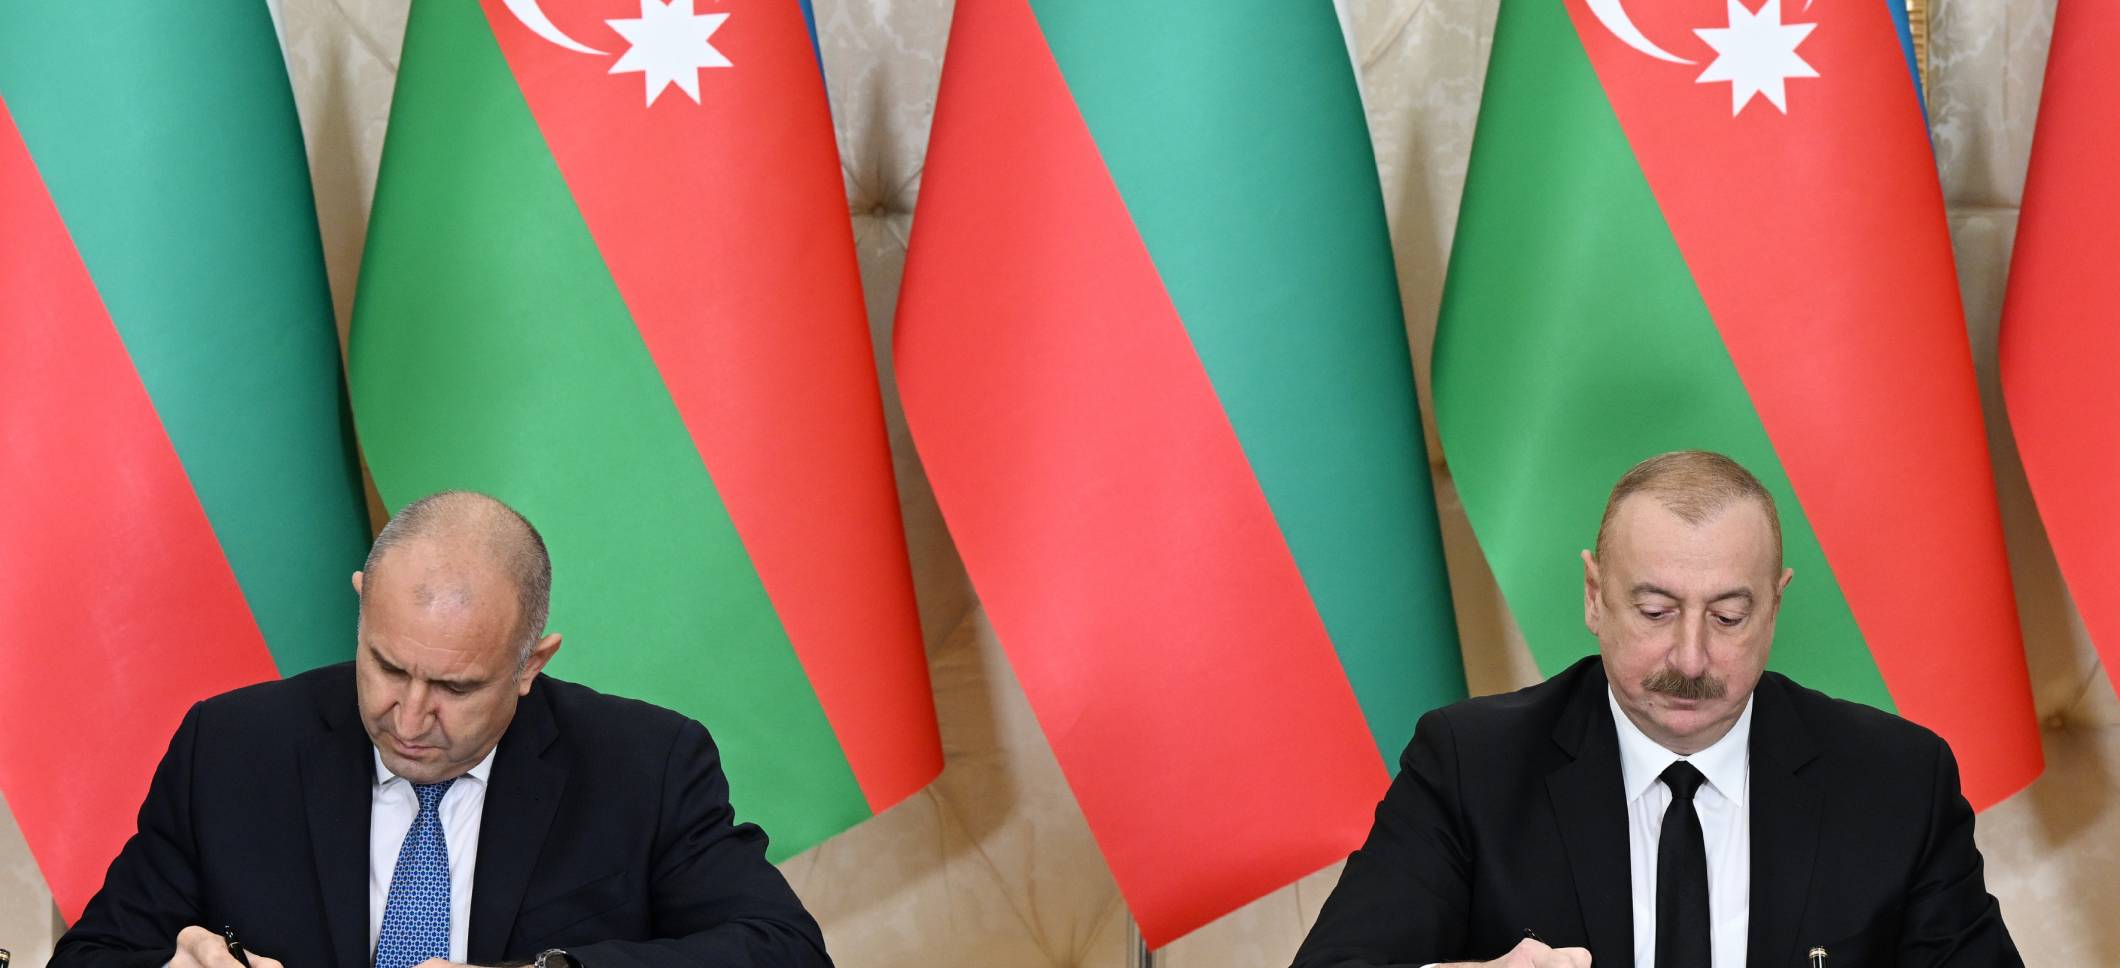 Ilham Aliyev and President Rumen Radev made press statements